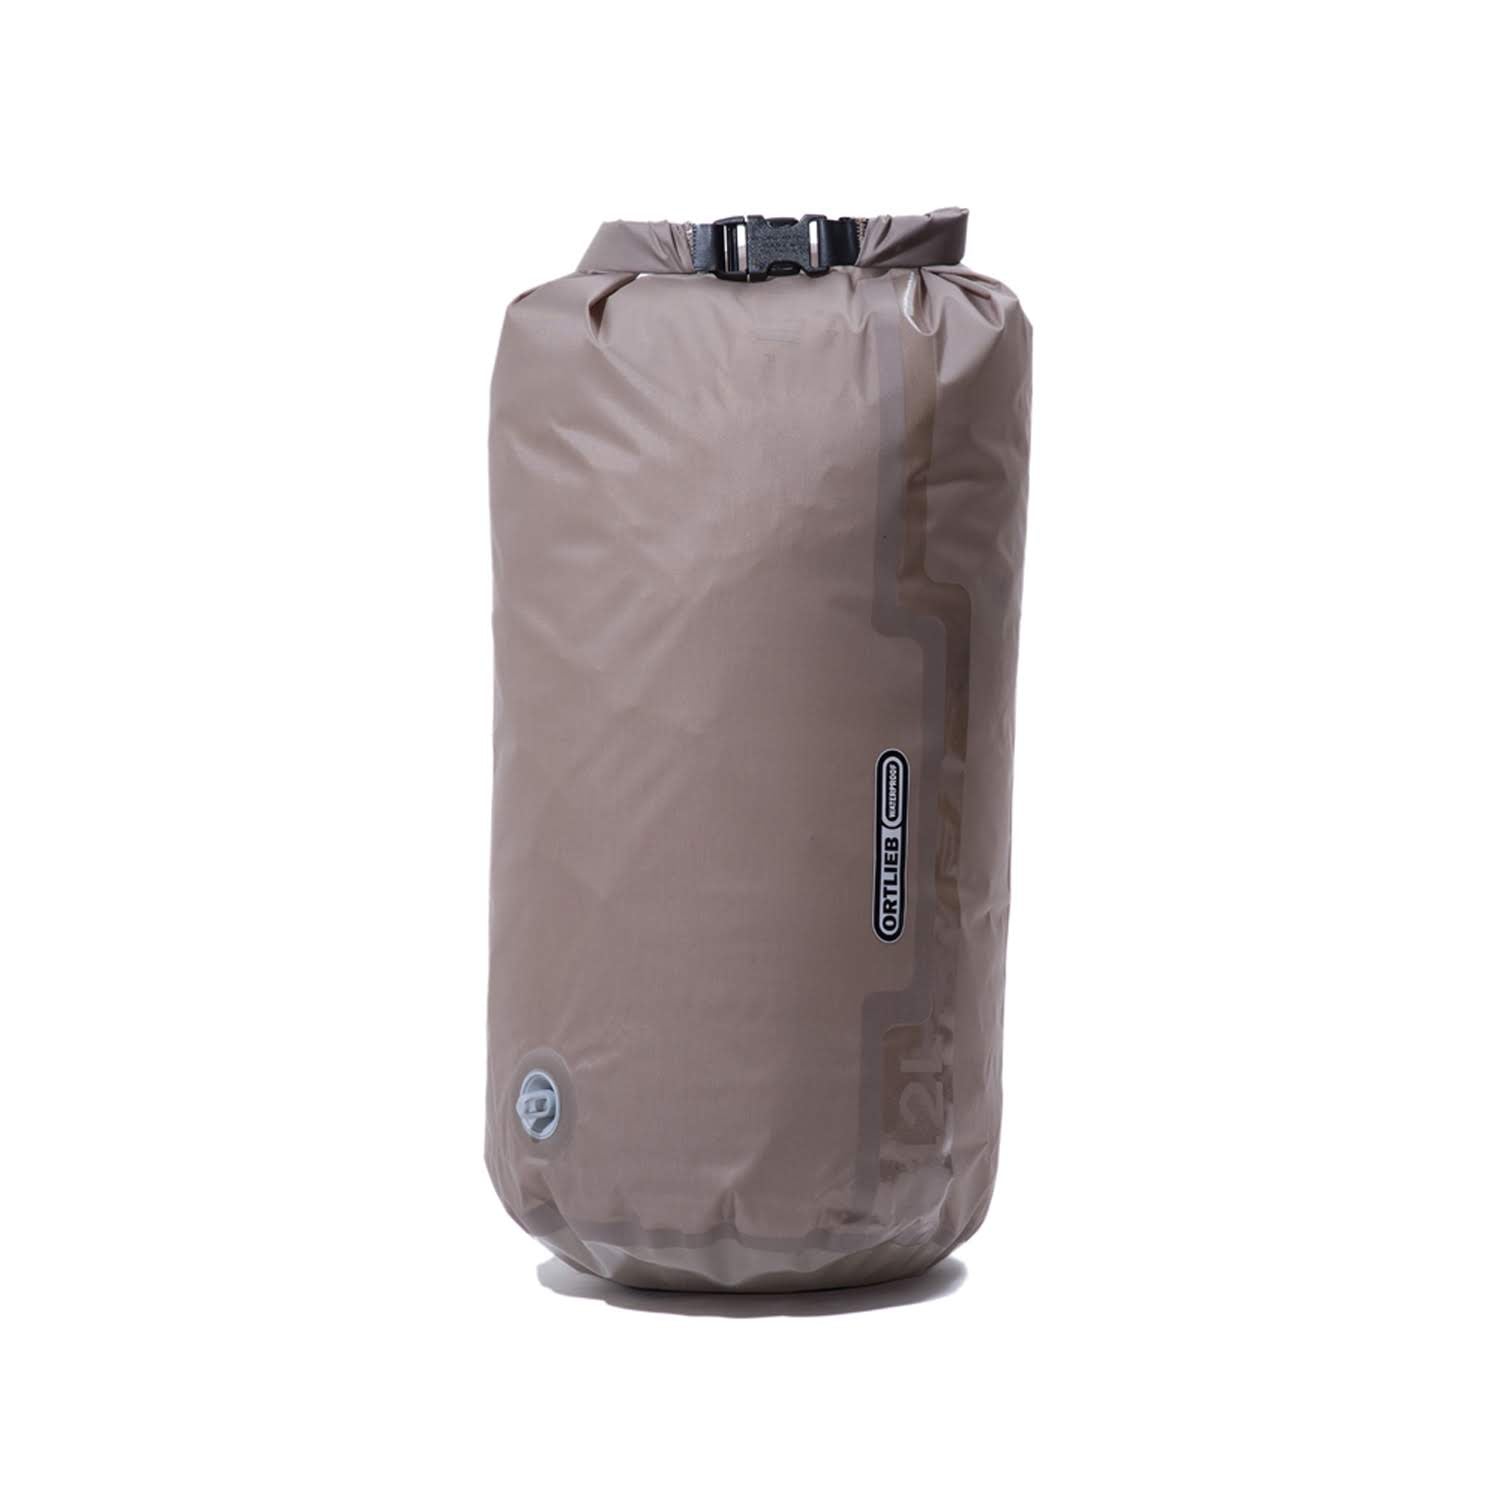 ORTLIEB Dry Bag PS10 バルブ付き